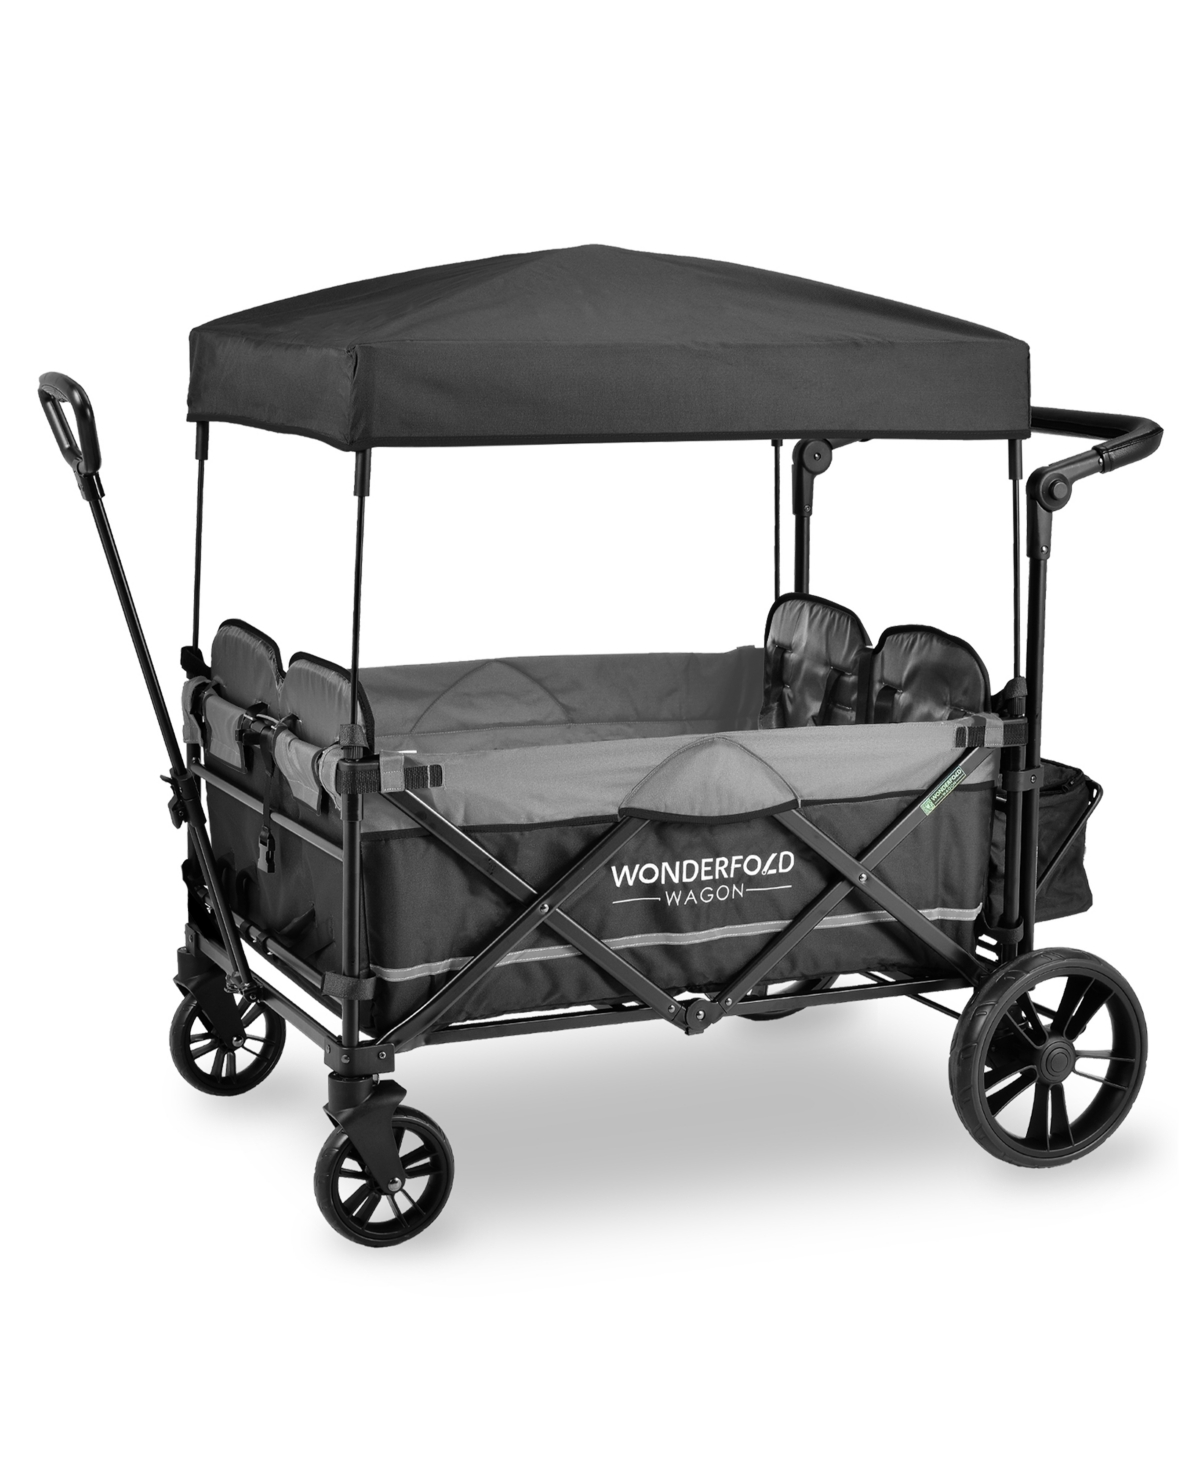 Wonderfold Wagon X4 Push And Pull Quad Stroller Wagon In Stone Gray